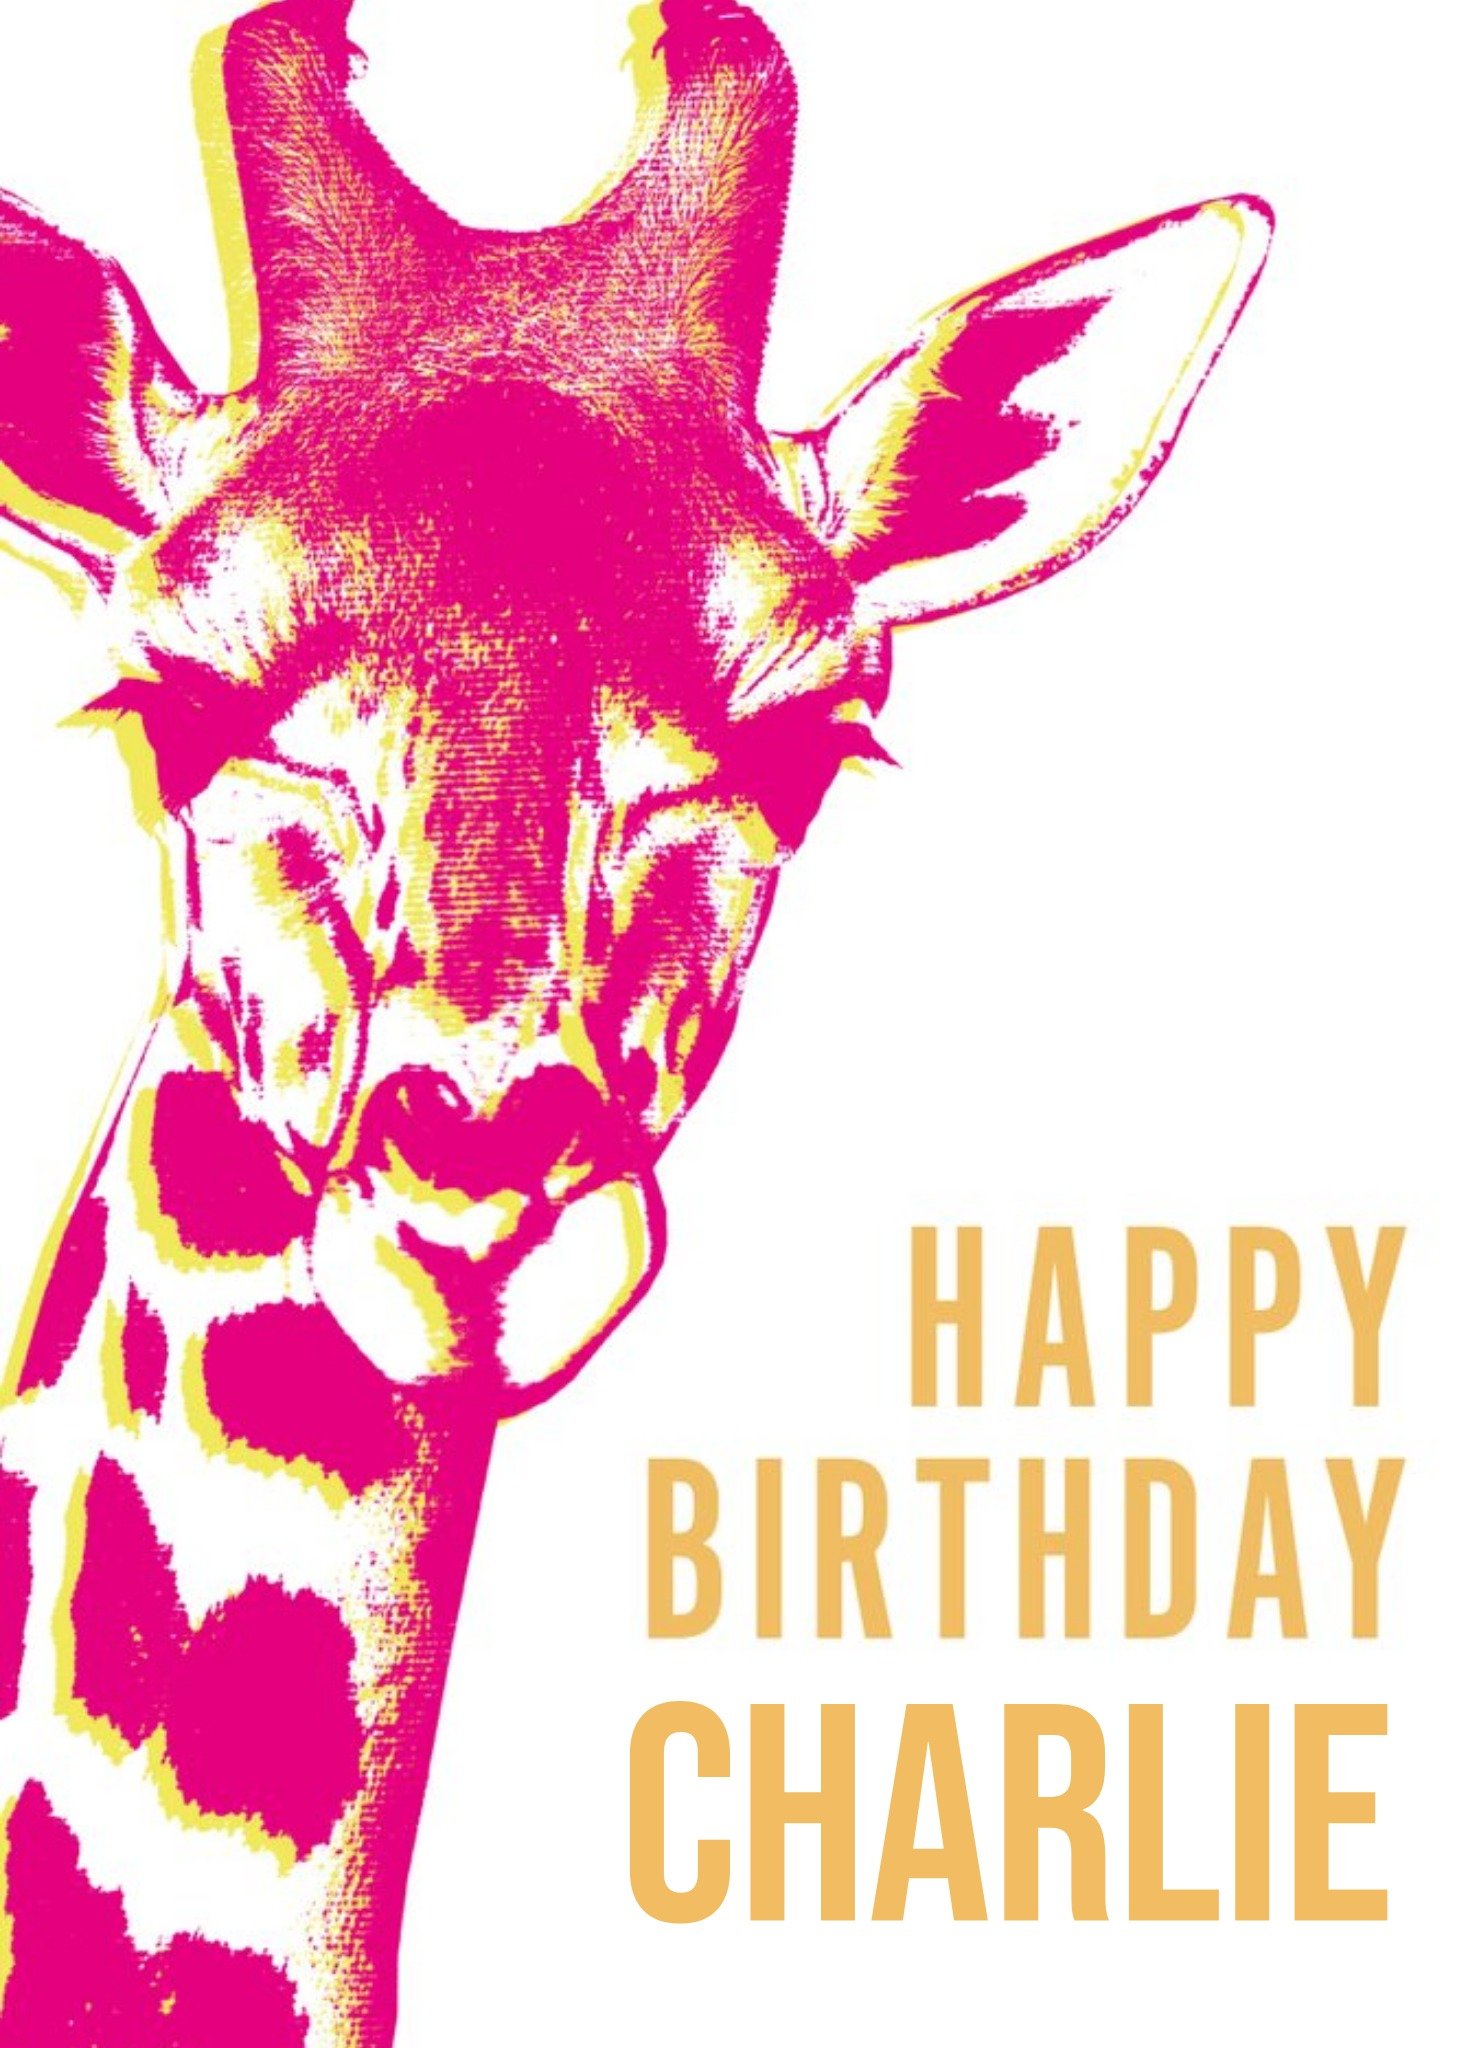 Moonpig Animal Planet Bright Graphic Pop Art Giraffe Birthday Card, Large